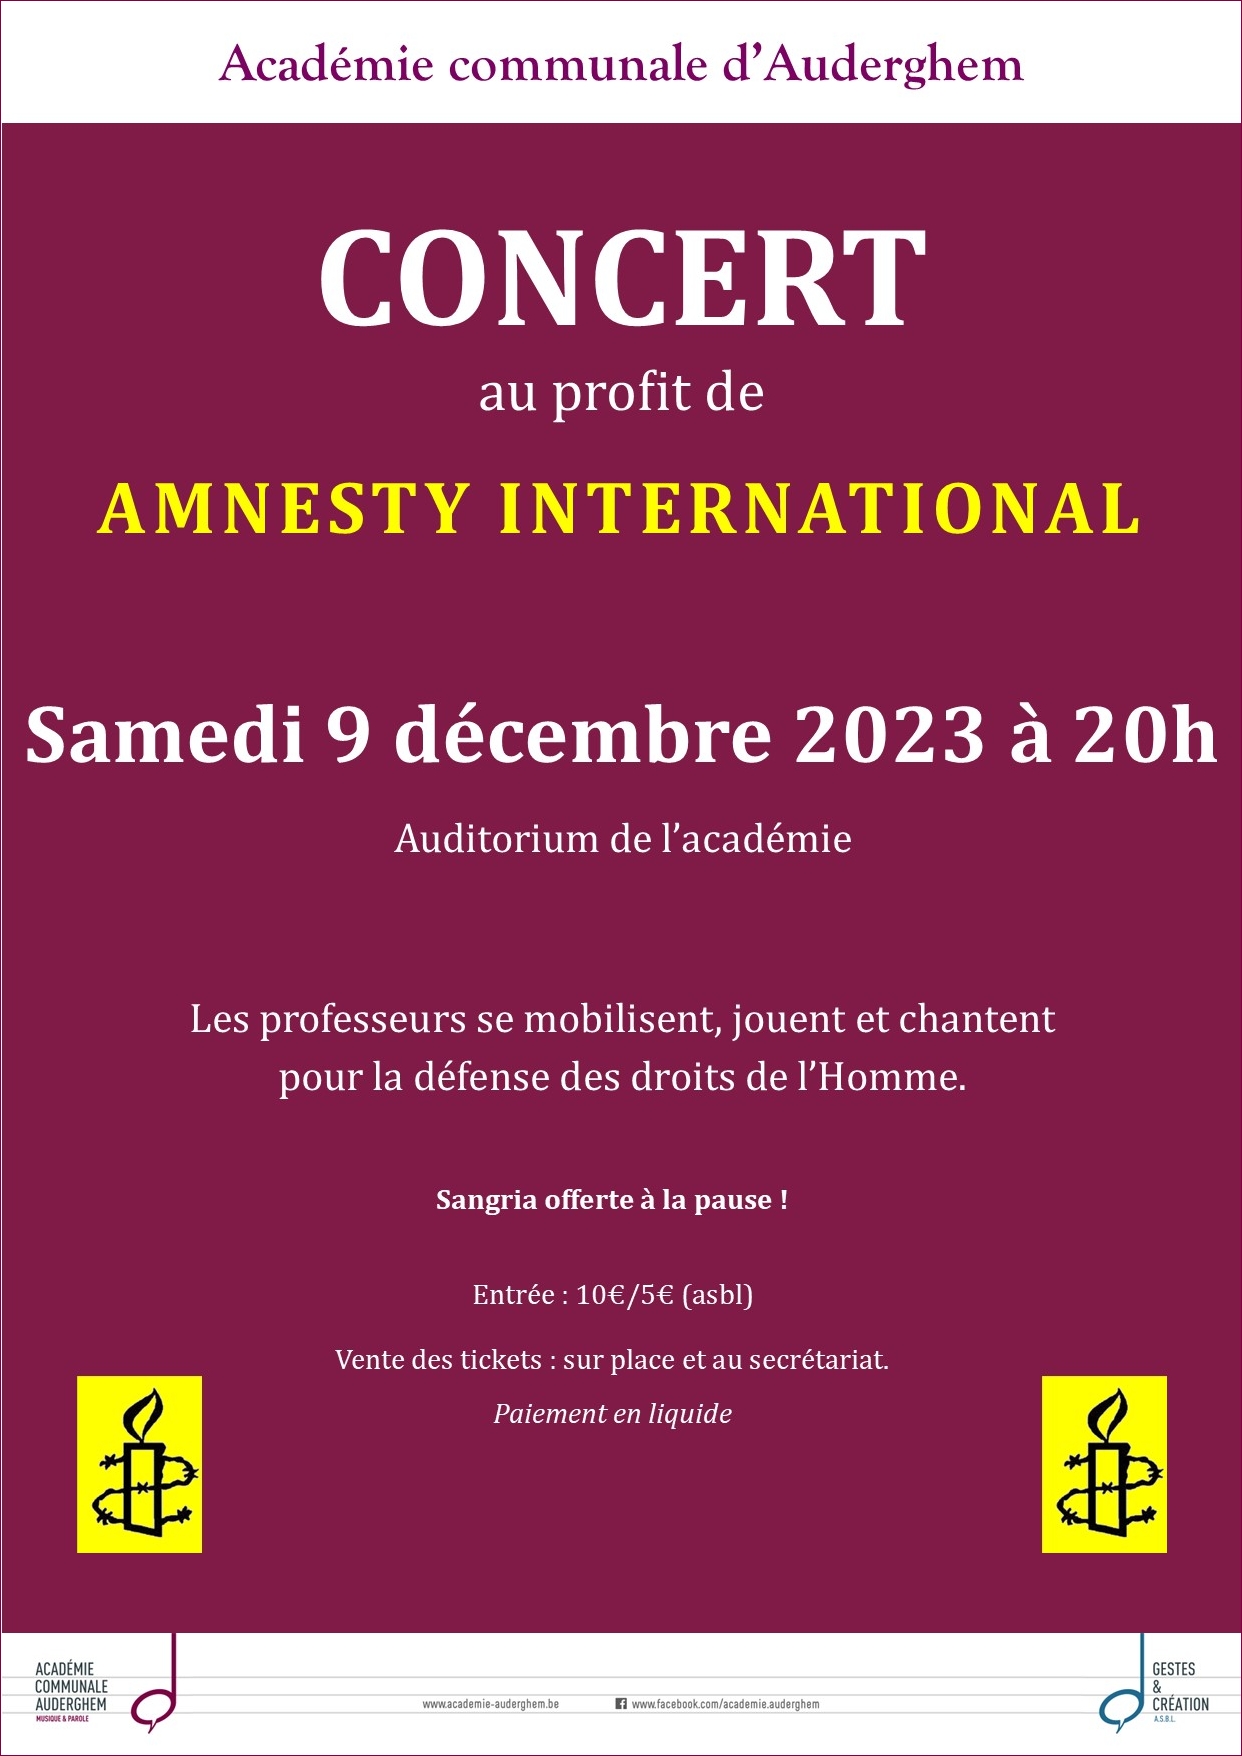 Concert au profit d'Amnesty International